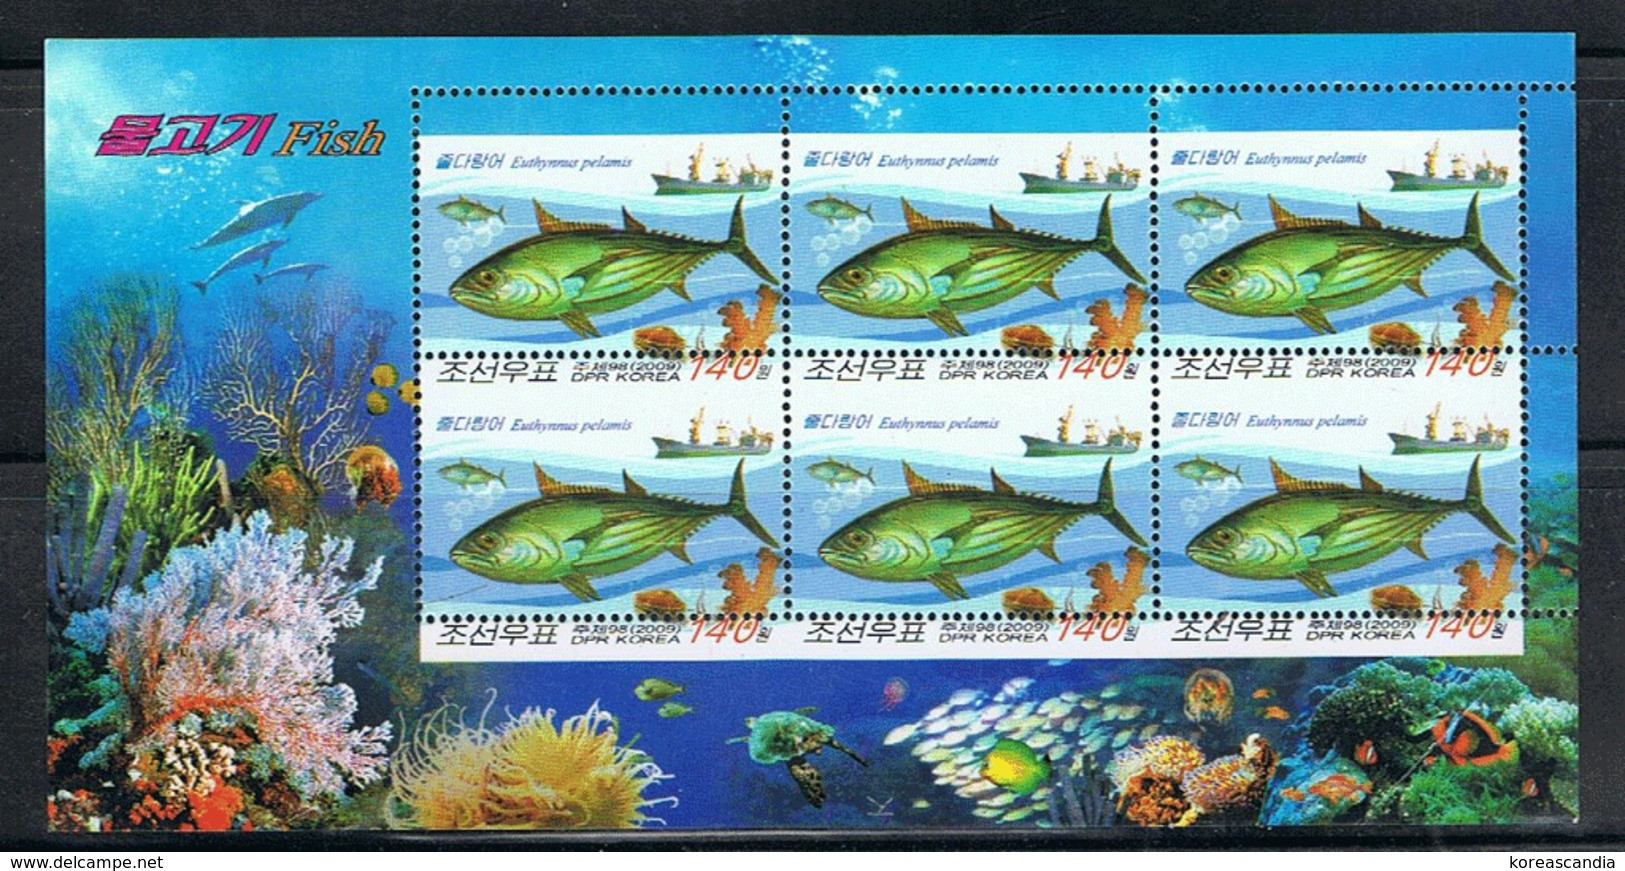 NORTH KOREA 2009 SKIPJACK TUNA FISH MISS PERFORATION SHEETLET - VERY RARE - Oddities On Stamps